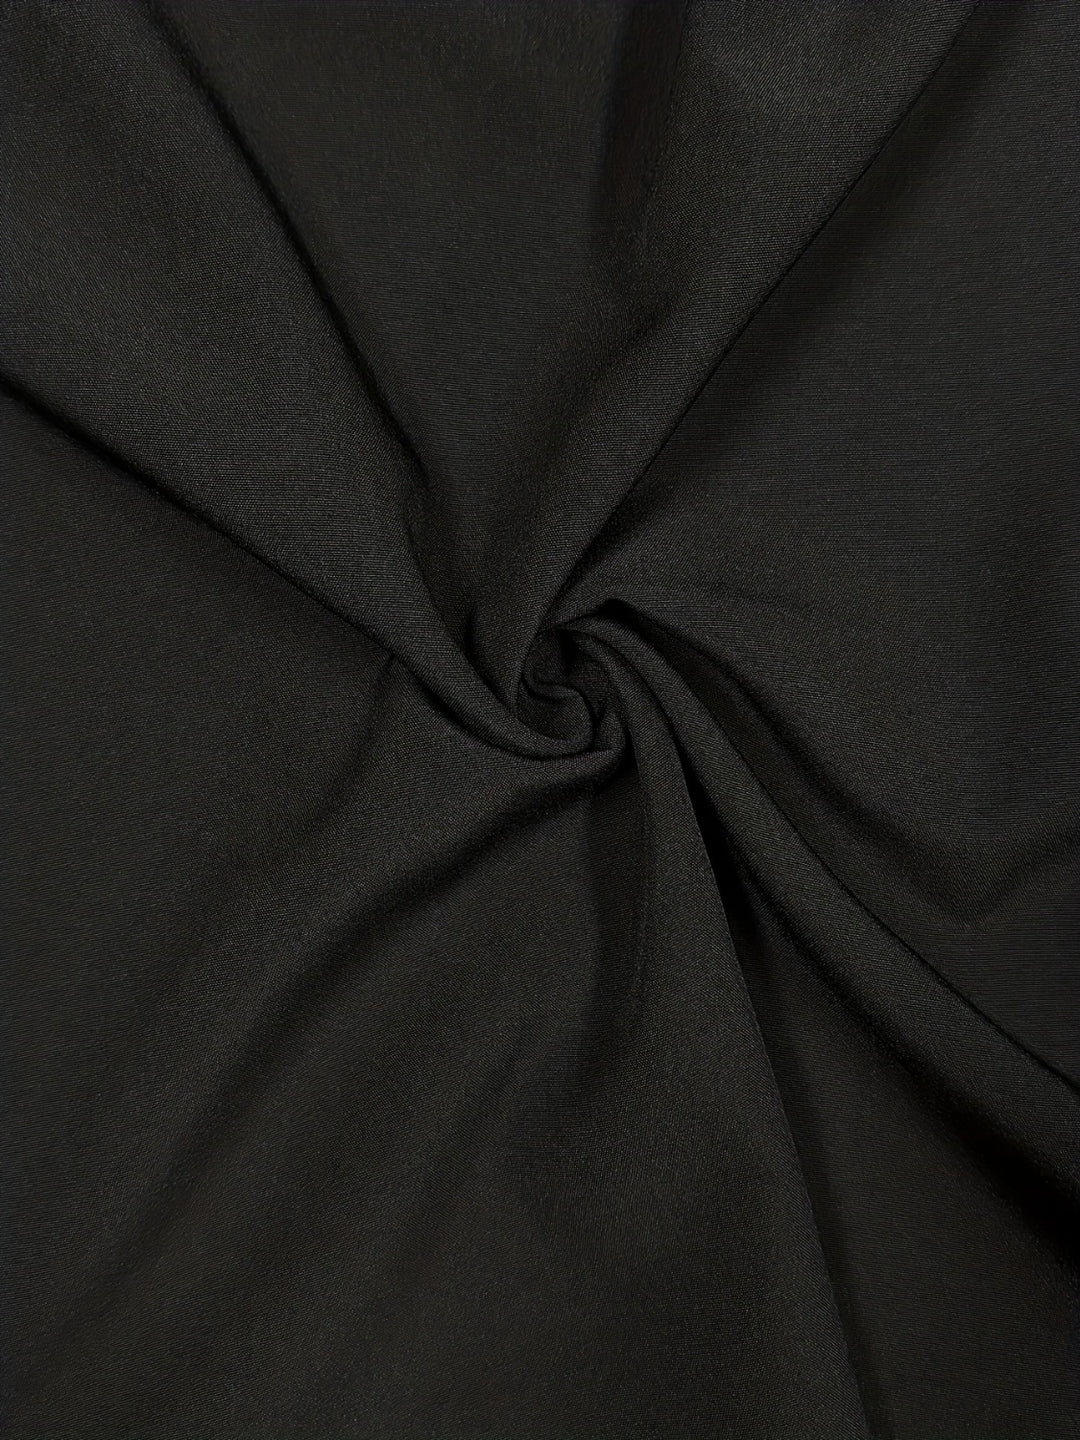 Lace Detail Asymmetrical Neck Short Sleeve Dress